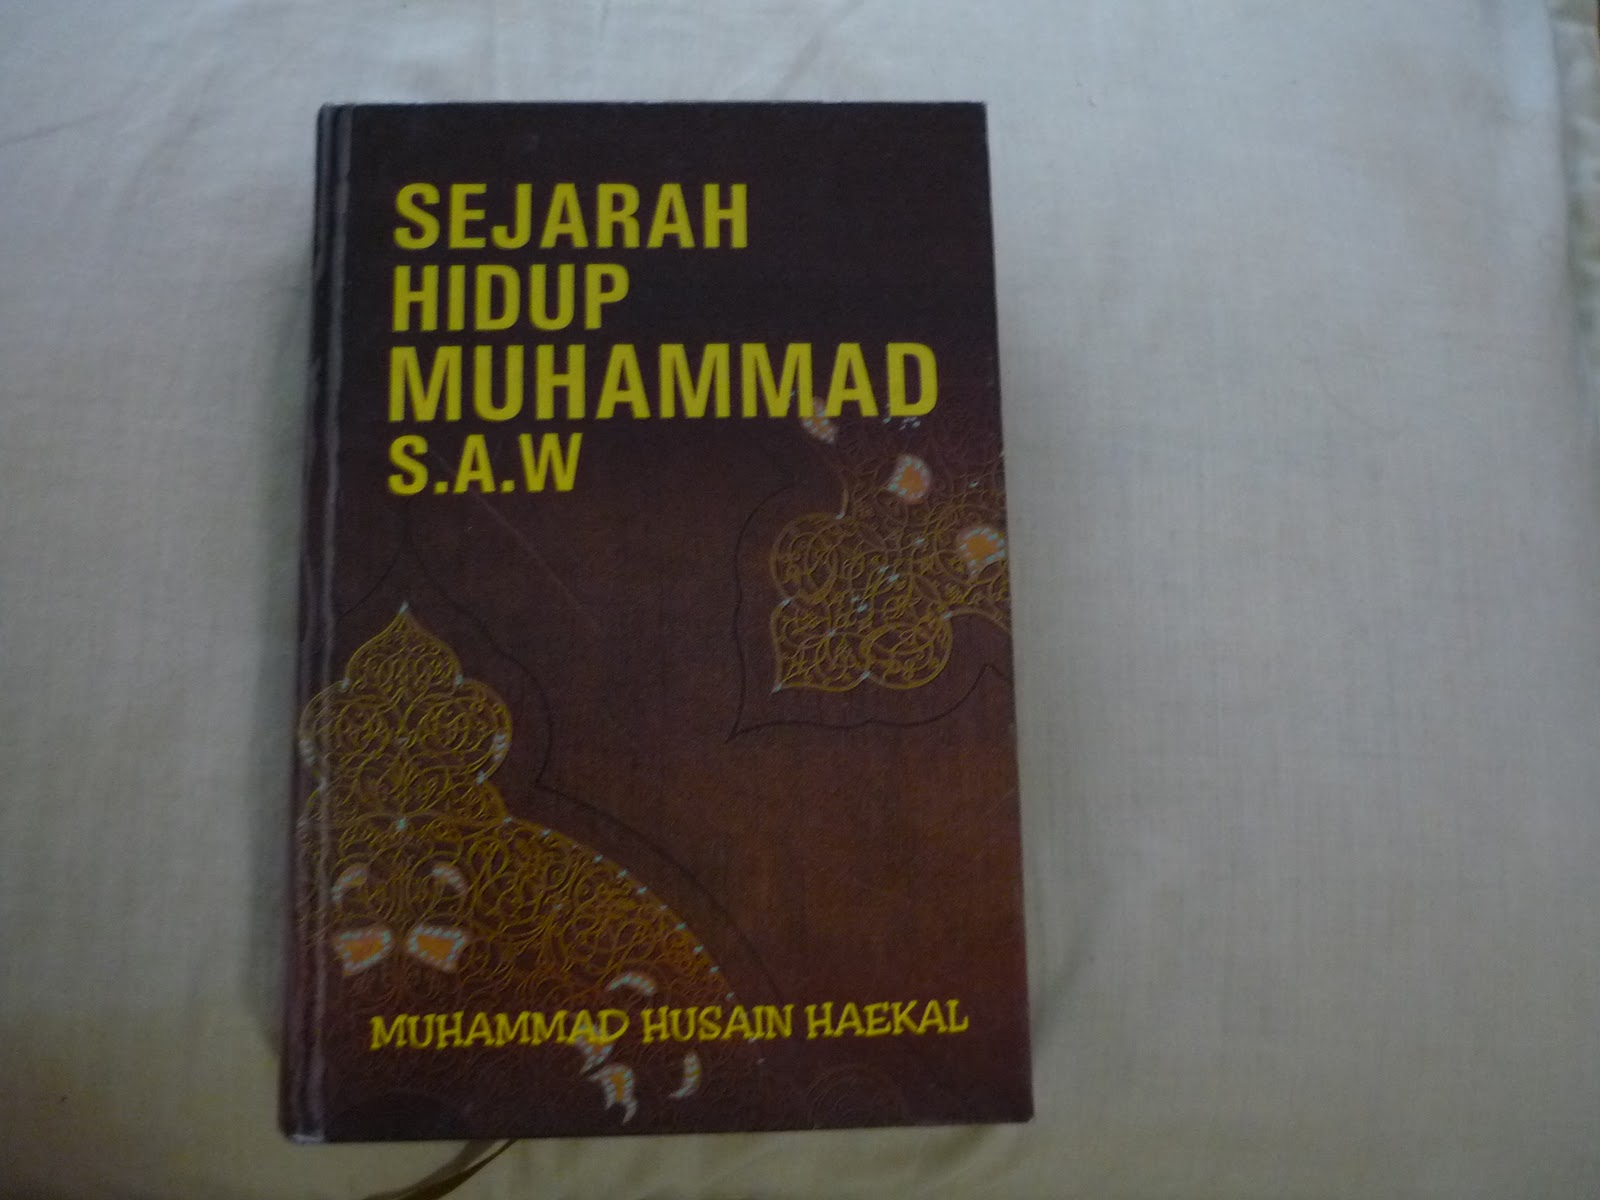 BUKU ISLAM POPULAR: Buku Agama Popular Dalam Bahasa Melayu 